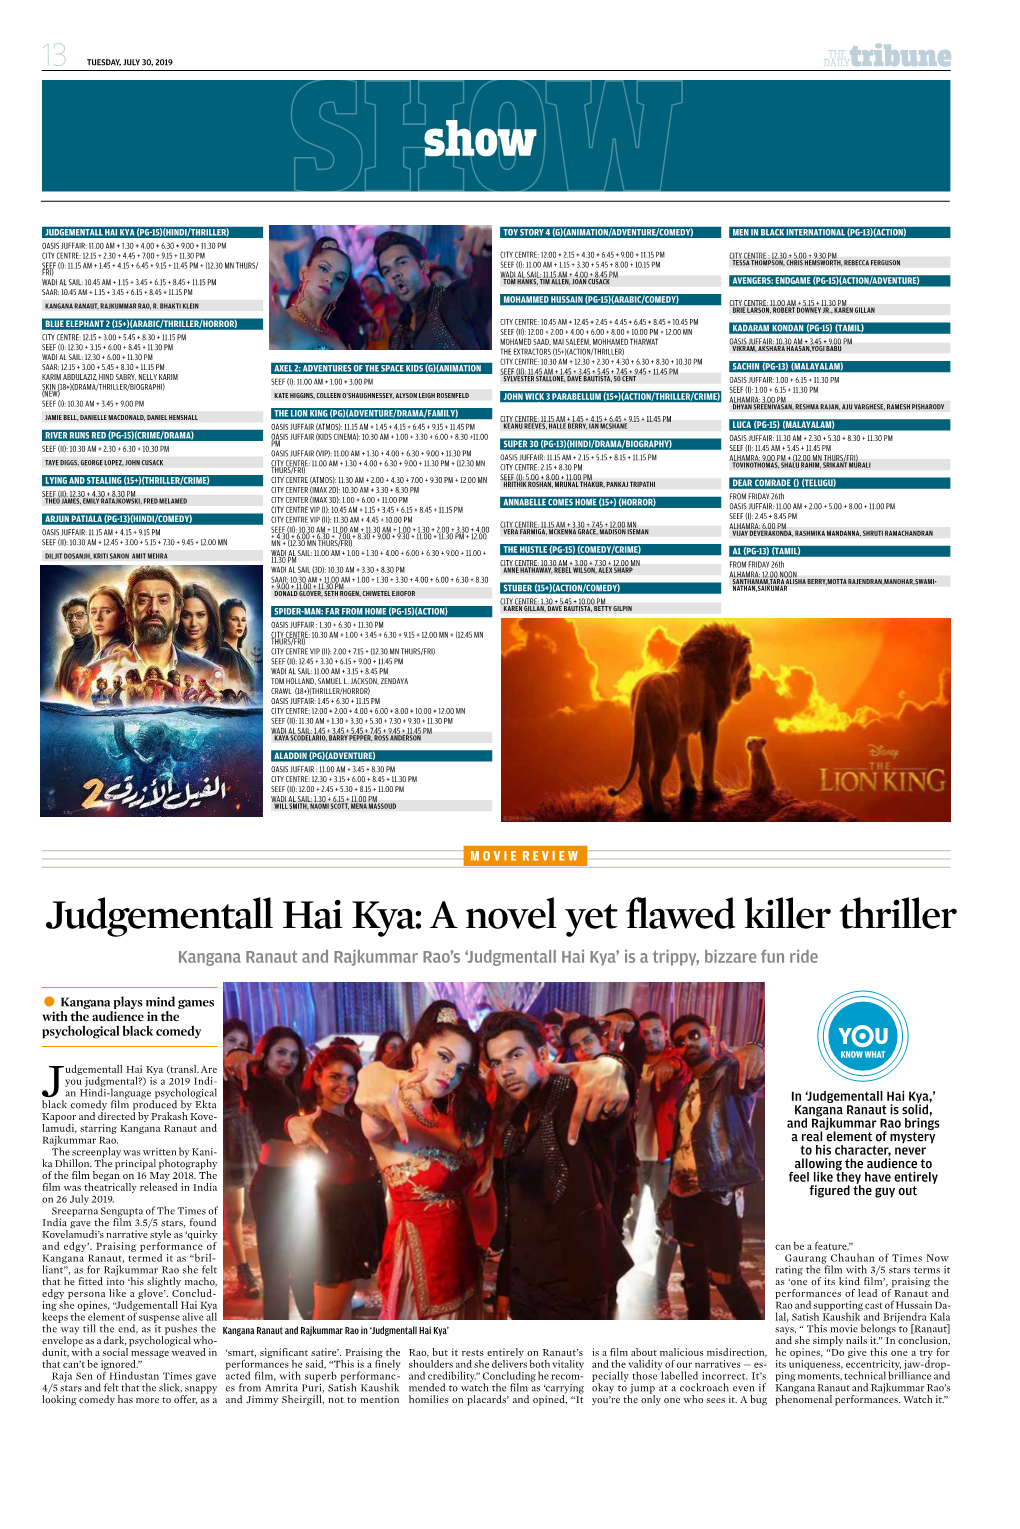 Judgementall Hai Kya: a Novel Yet Flawed Killer Thriller Kangana Ranaut and Rajkummar Rao’S ‘Judgmentall Hai Kya’ Is a Trippy, Bizzare Fun Ride